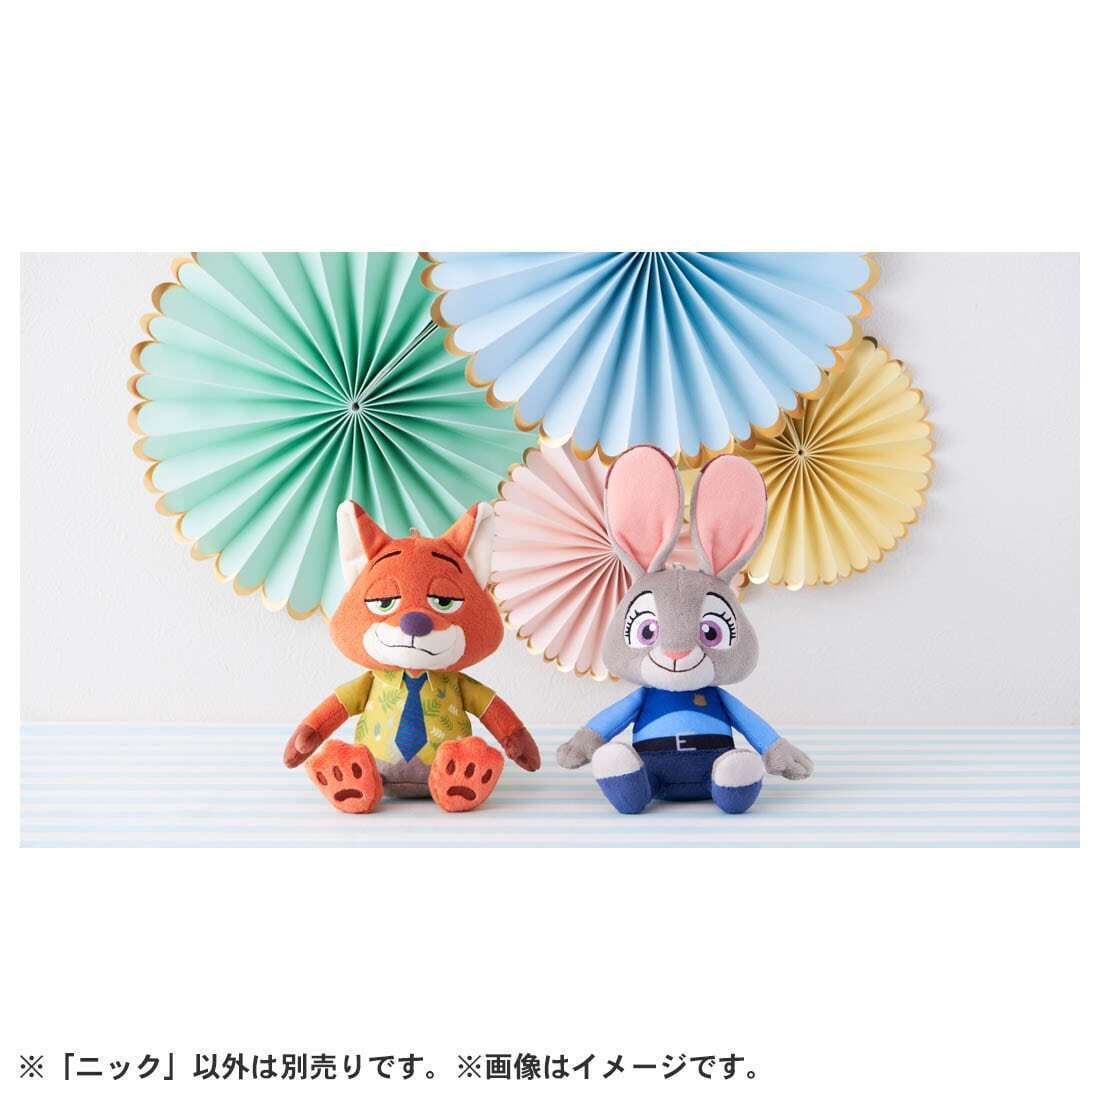 Takara Tomy Disney Beans Collection Nick & Judy Plush Doll 2set - $78.88